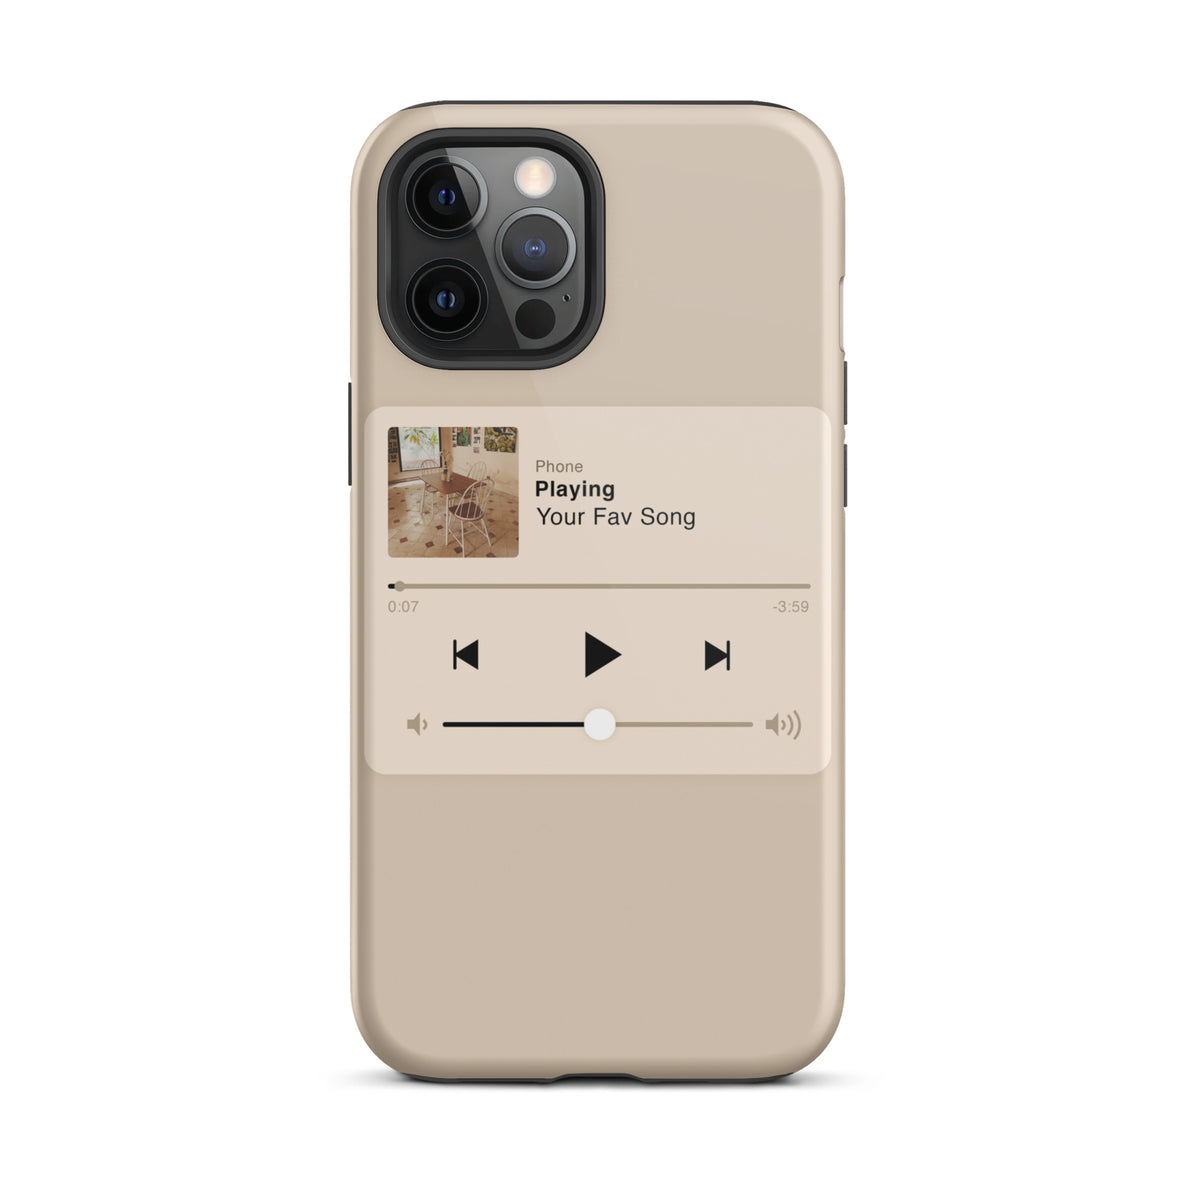 Tan favorite song iphone case